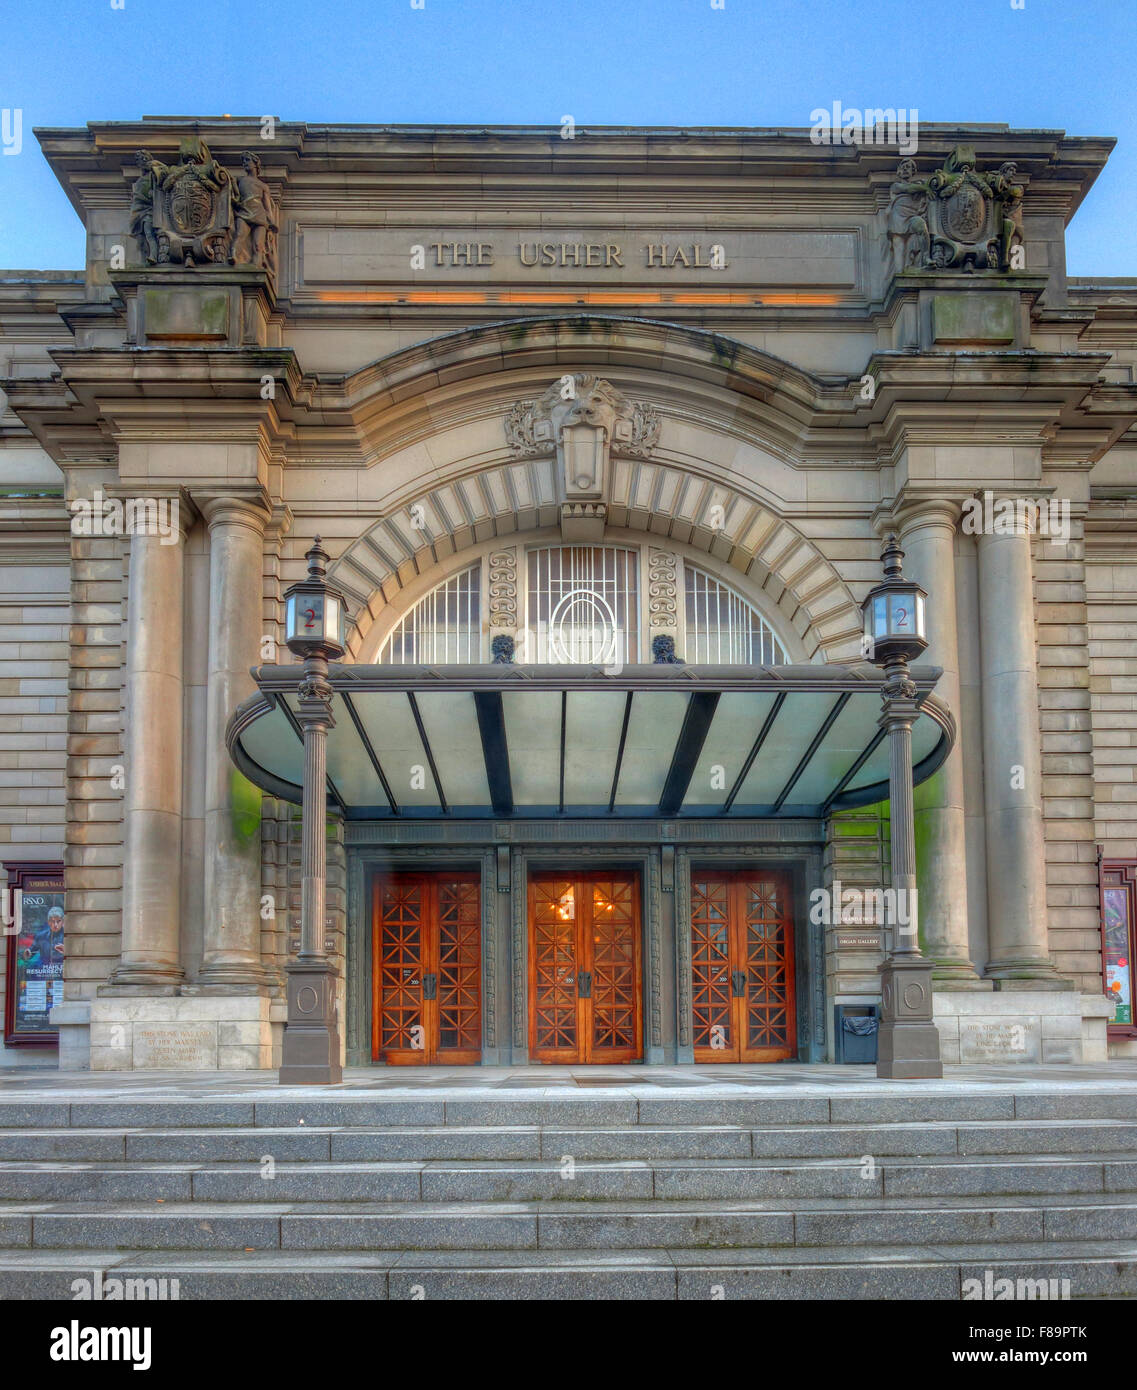 Usher Hall, arts & theatre venue, Lothian Road,Edinburgh, Scotland, United Kingdom, EH1 2EA Stock Photo